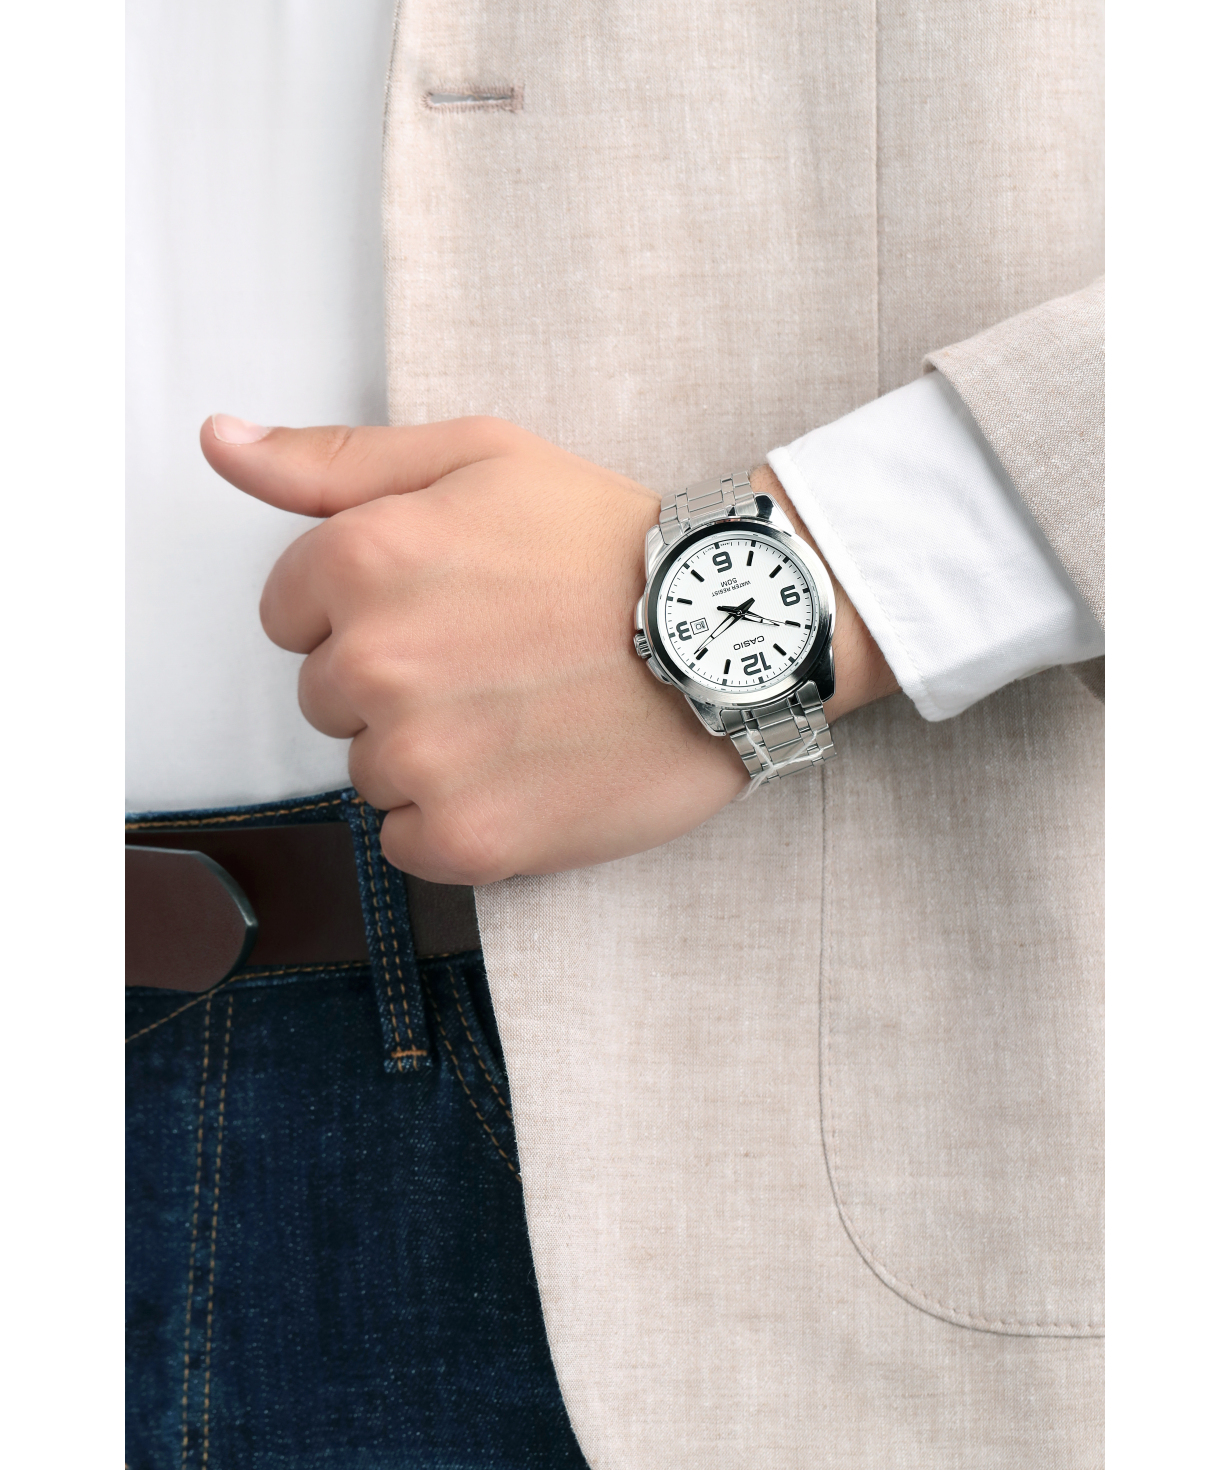 Wristwatch  `Casio` MTP-1314D-7AVDF